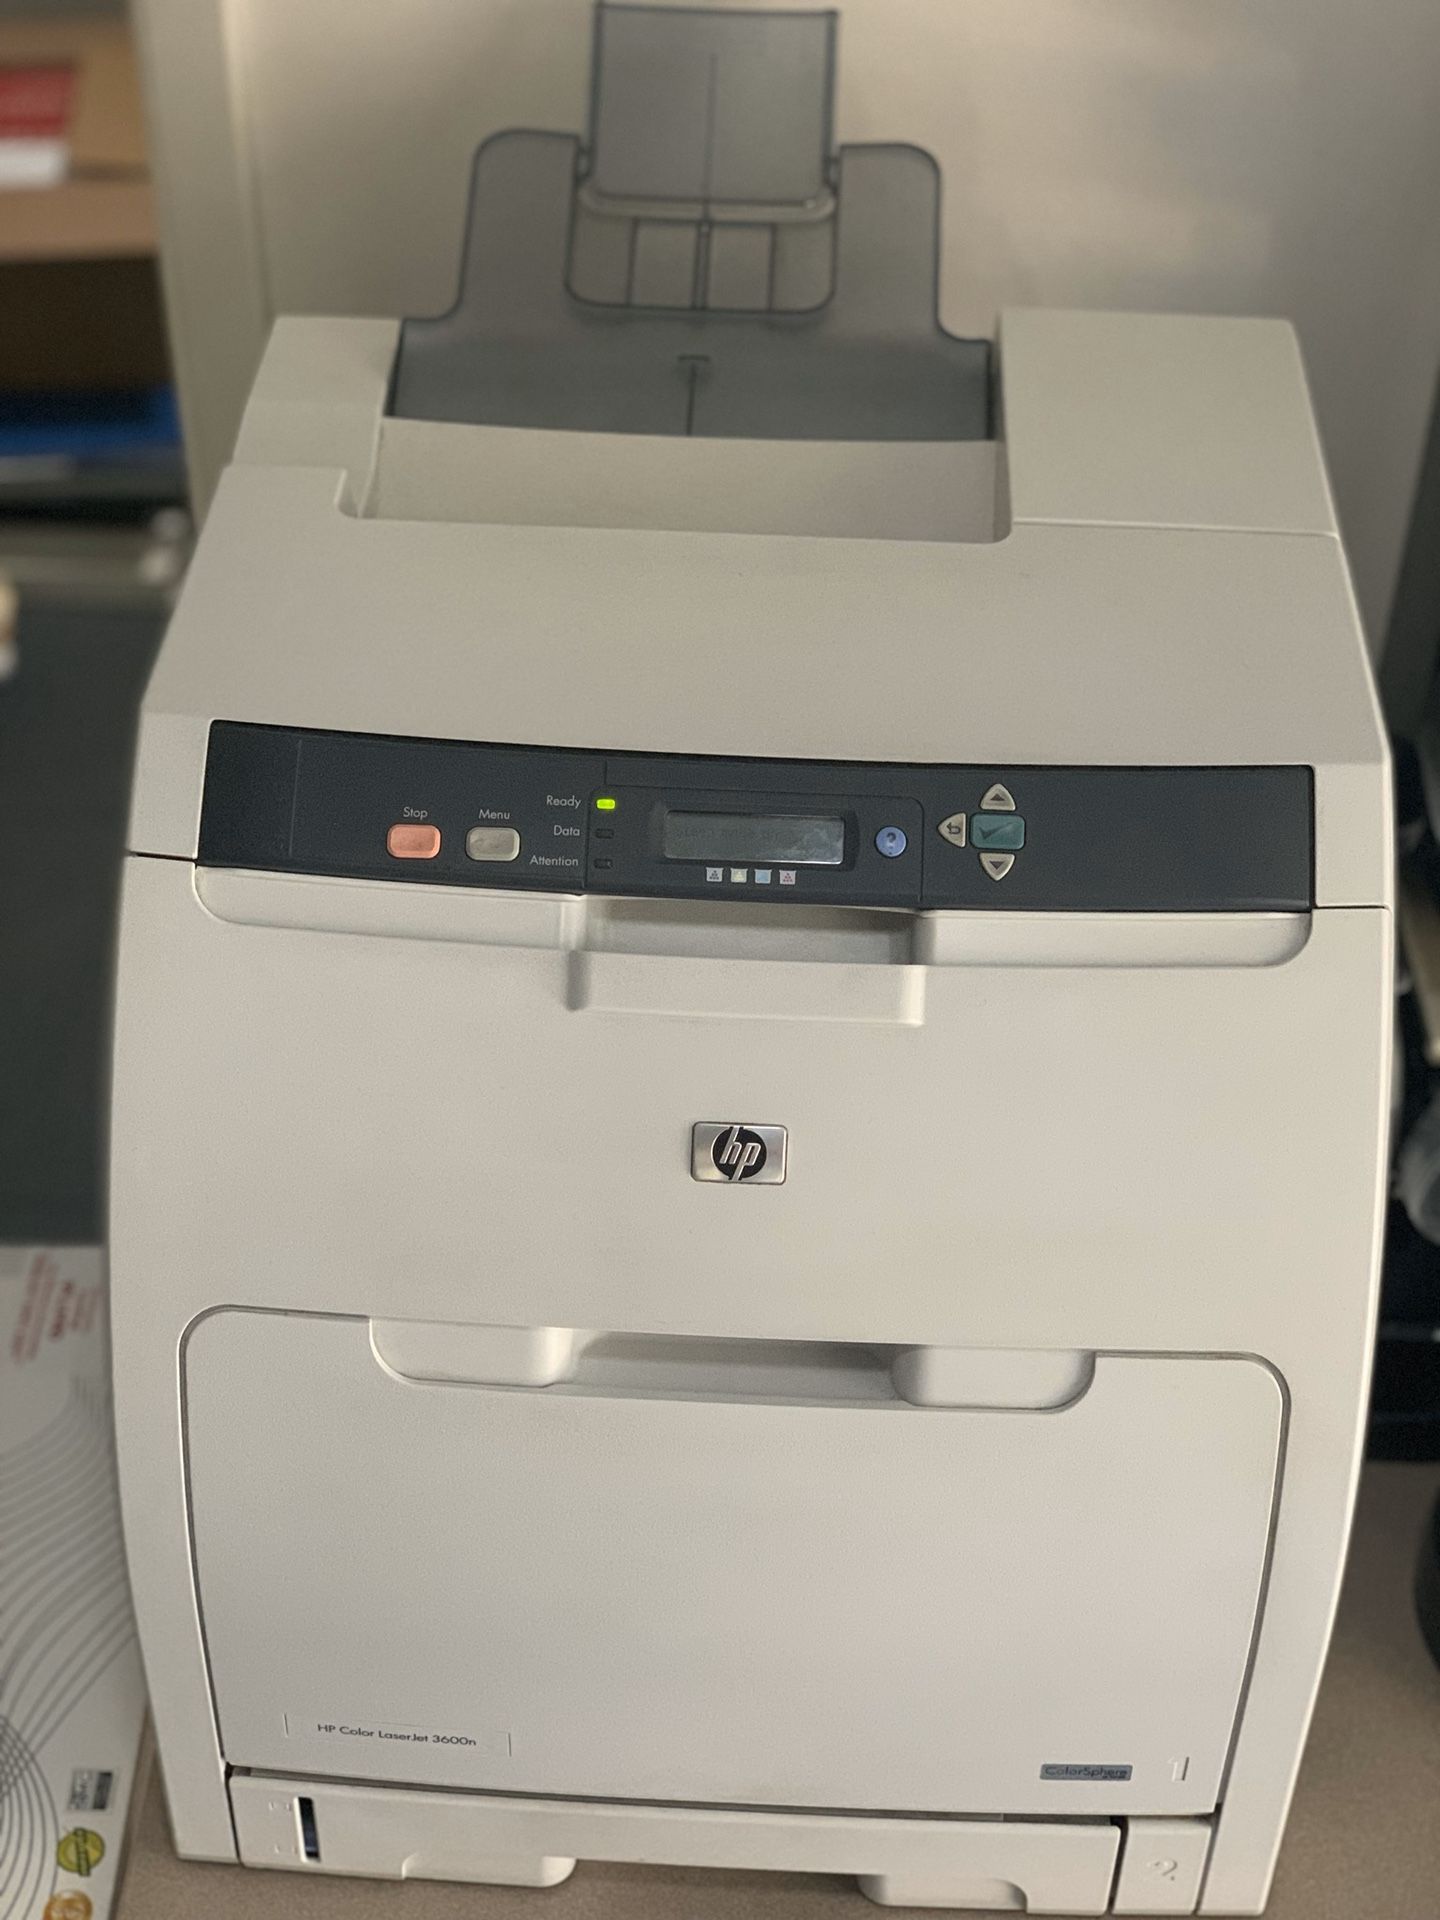 DISCOUNT Office Printer - HP Color Laser Jet 3600n Office Printer